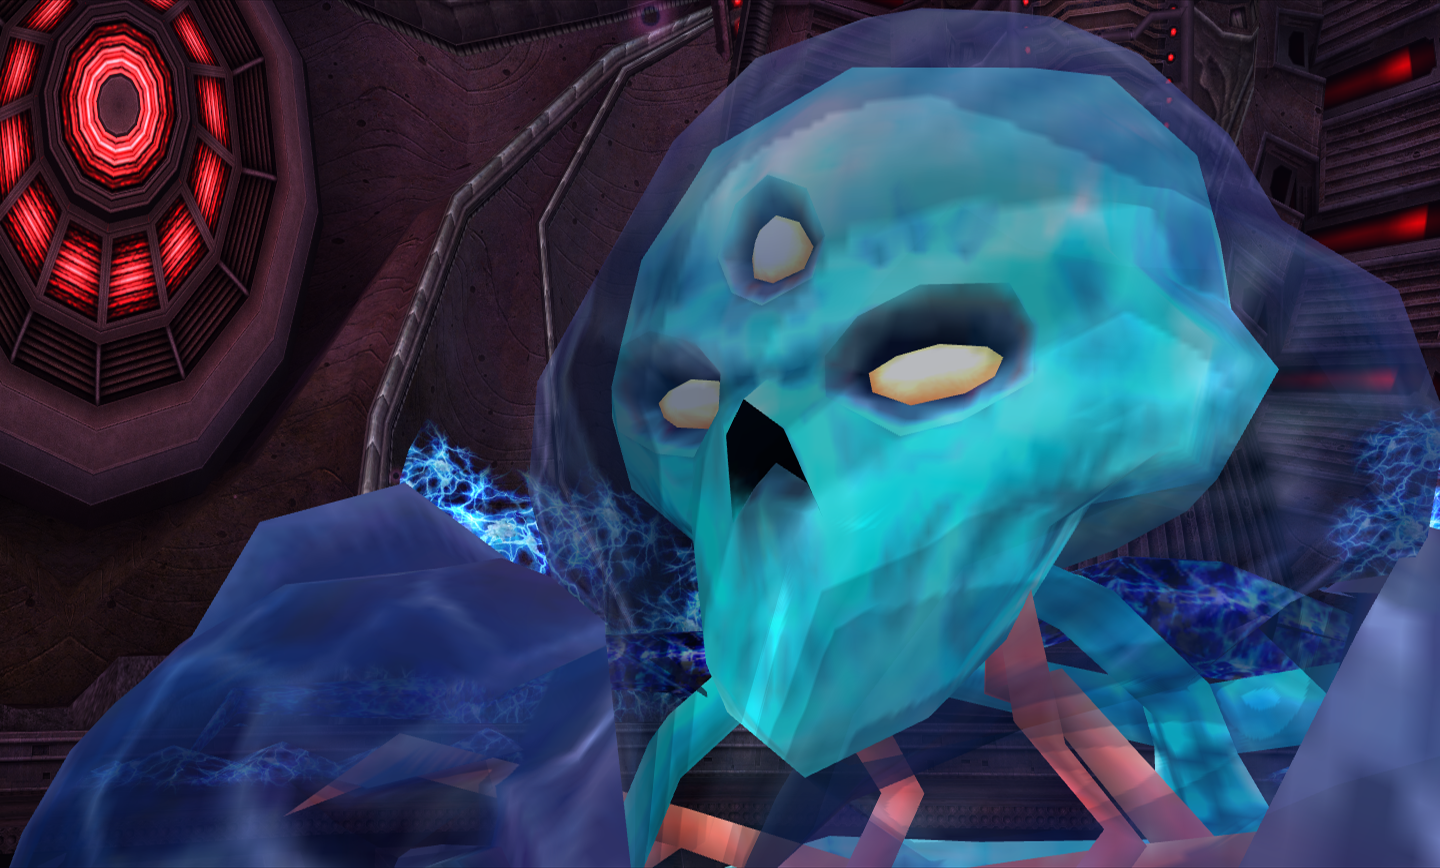 What do you think Dark Samus looks like under that helmet? : Metroid